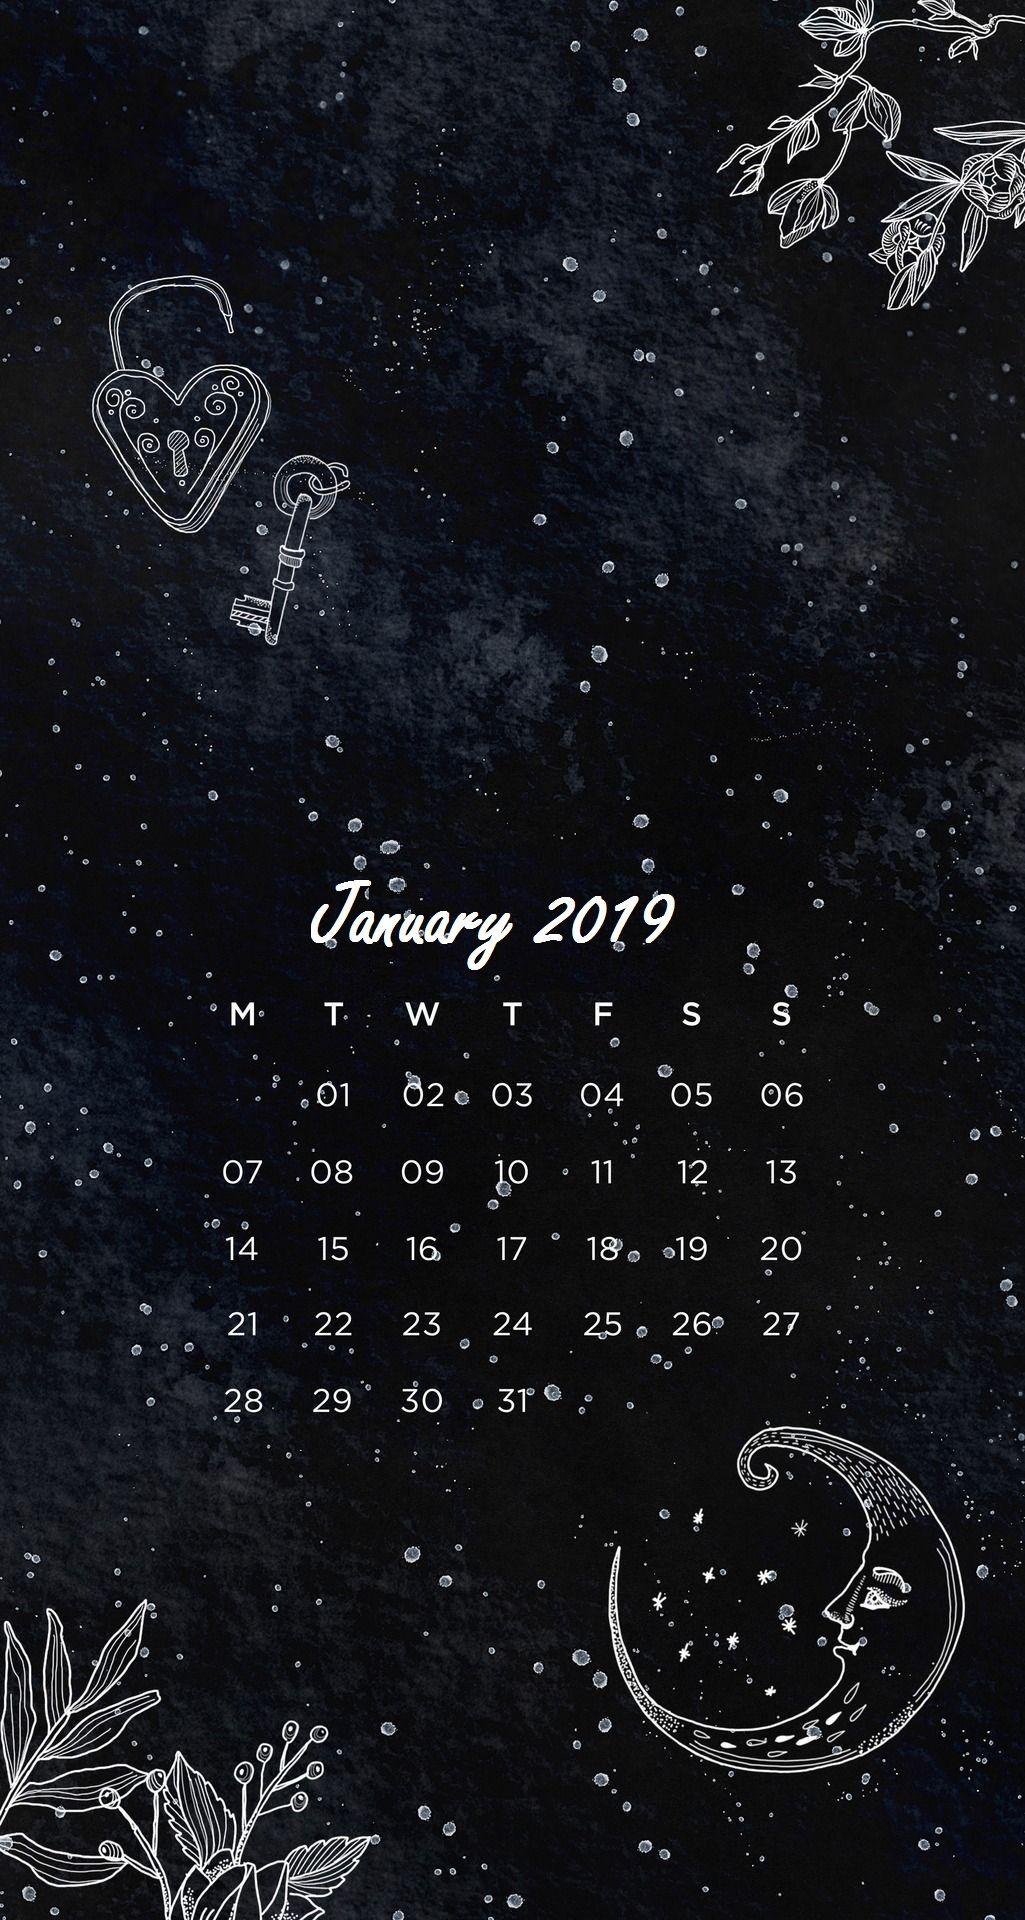 January 2019 Calendar Wallpapers - Wallpaper Cave